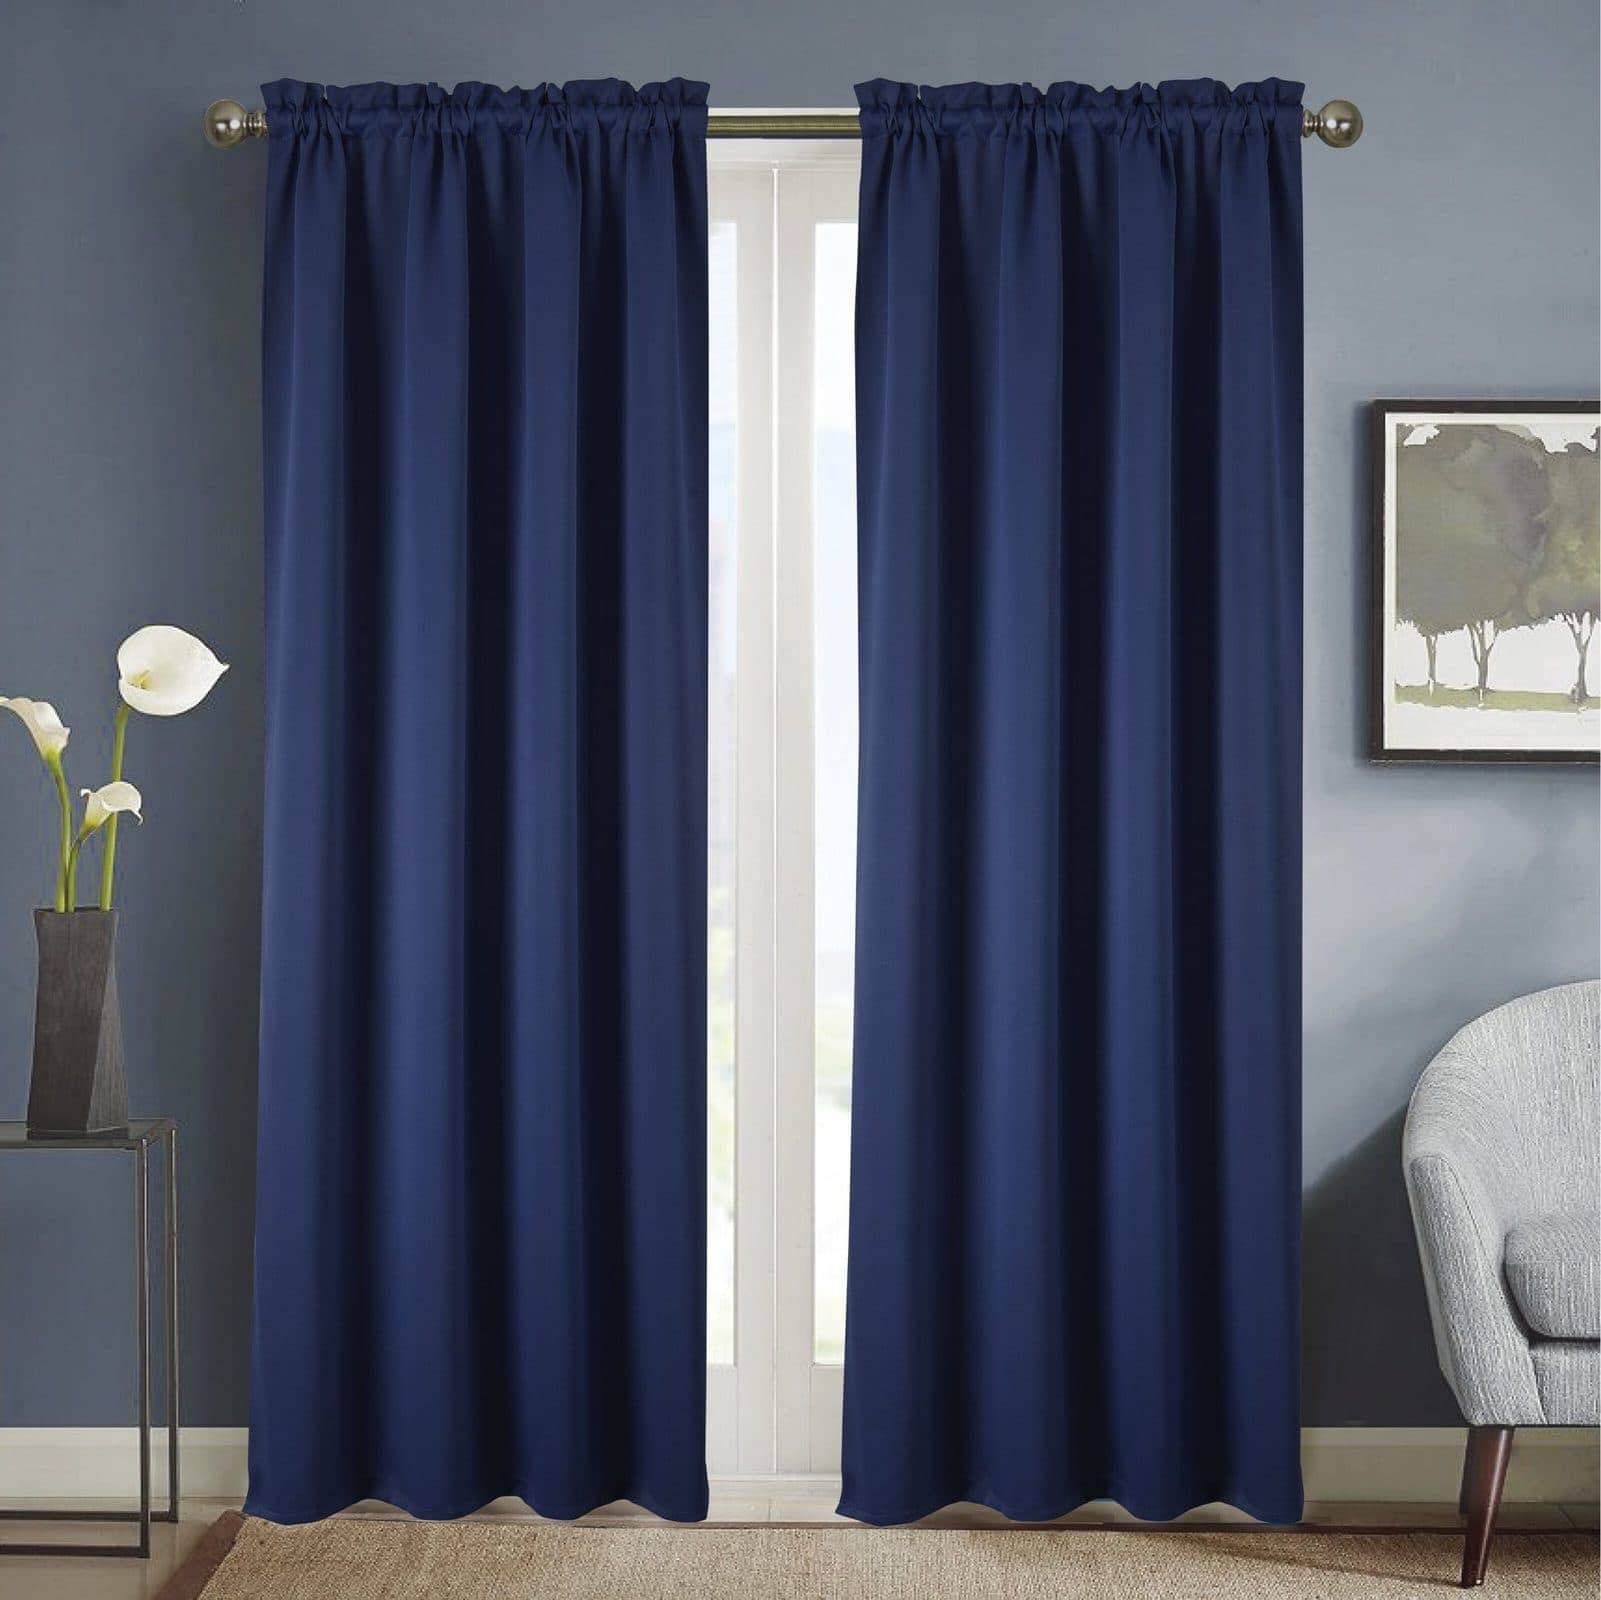 Light Blue Curtains Grey Walls Juventu dugtleon